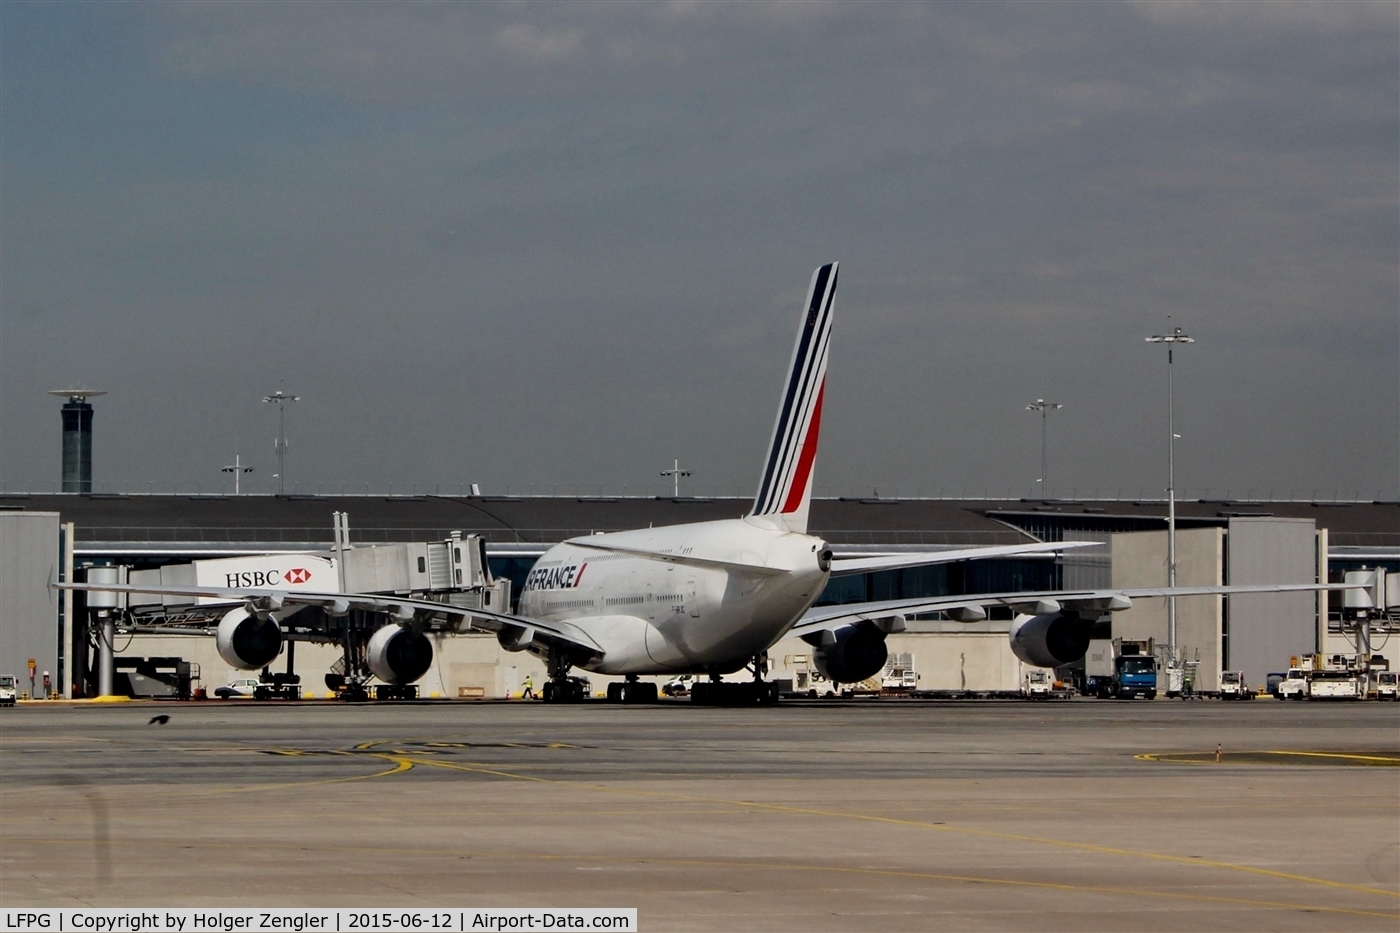 Paris Charles de Gaulle Airport (Roissy Airport), Paris France (LFPG) - Apron impressions....